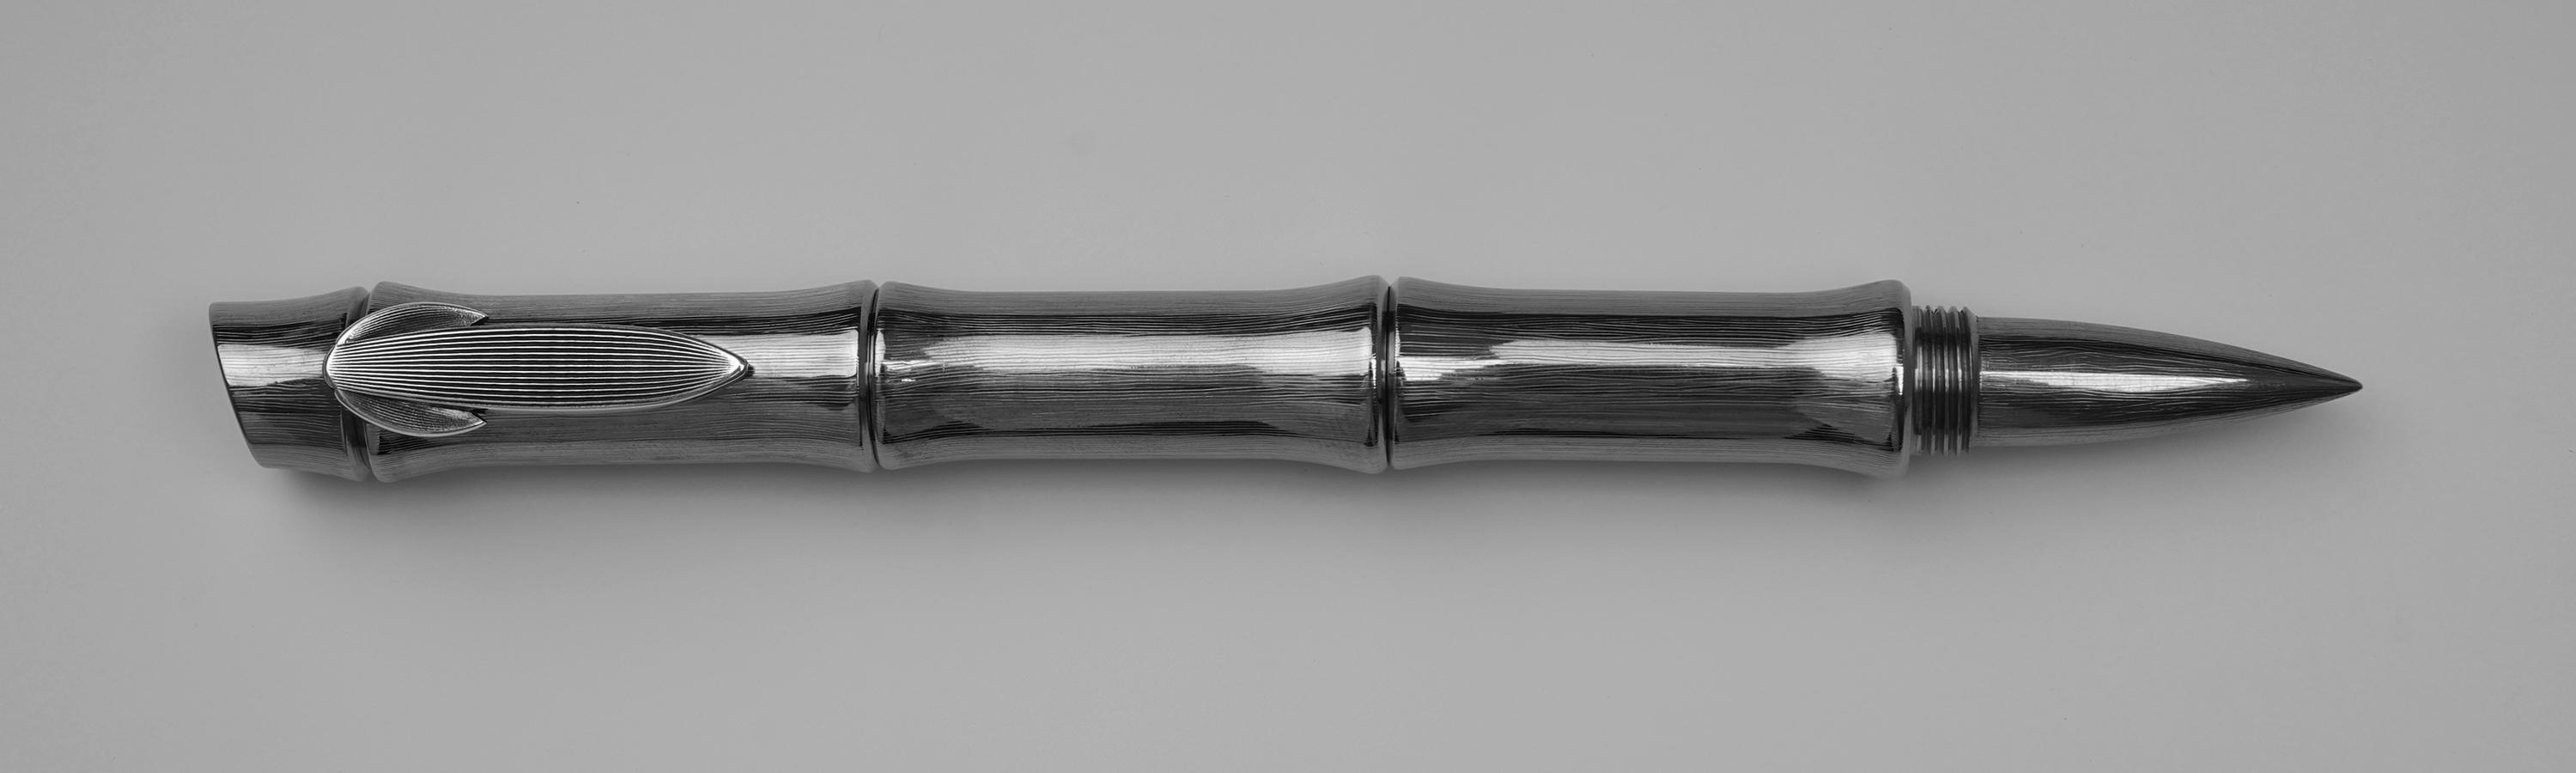 Titanium pen Streltsov P&A